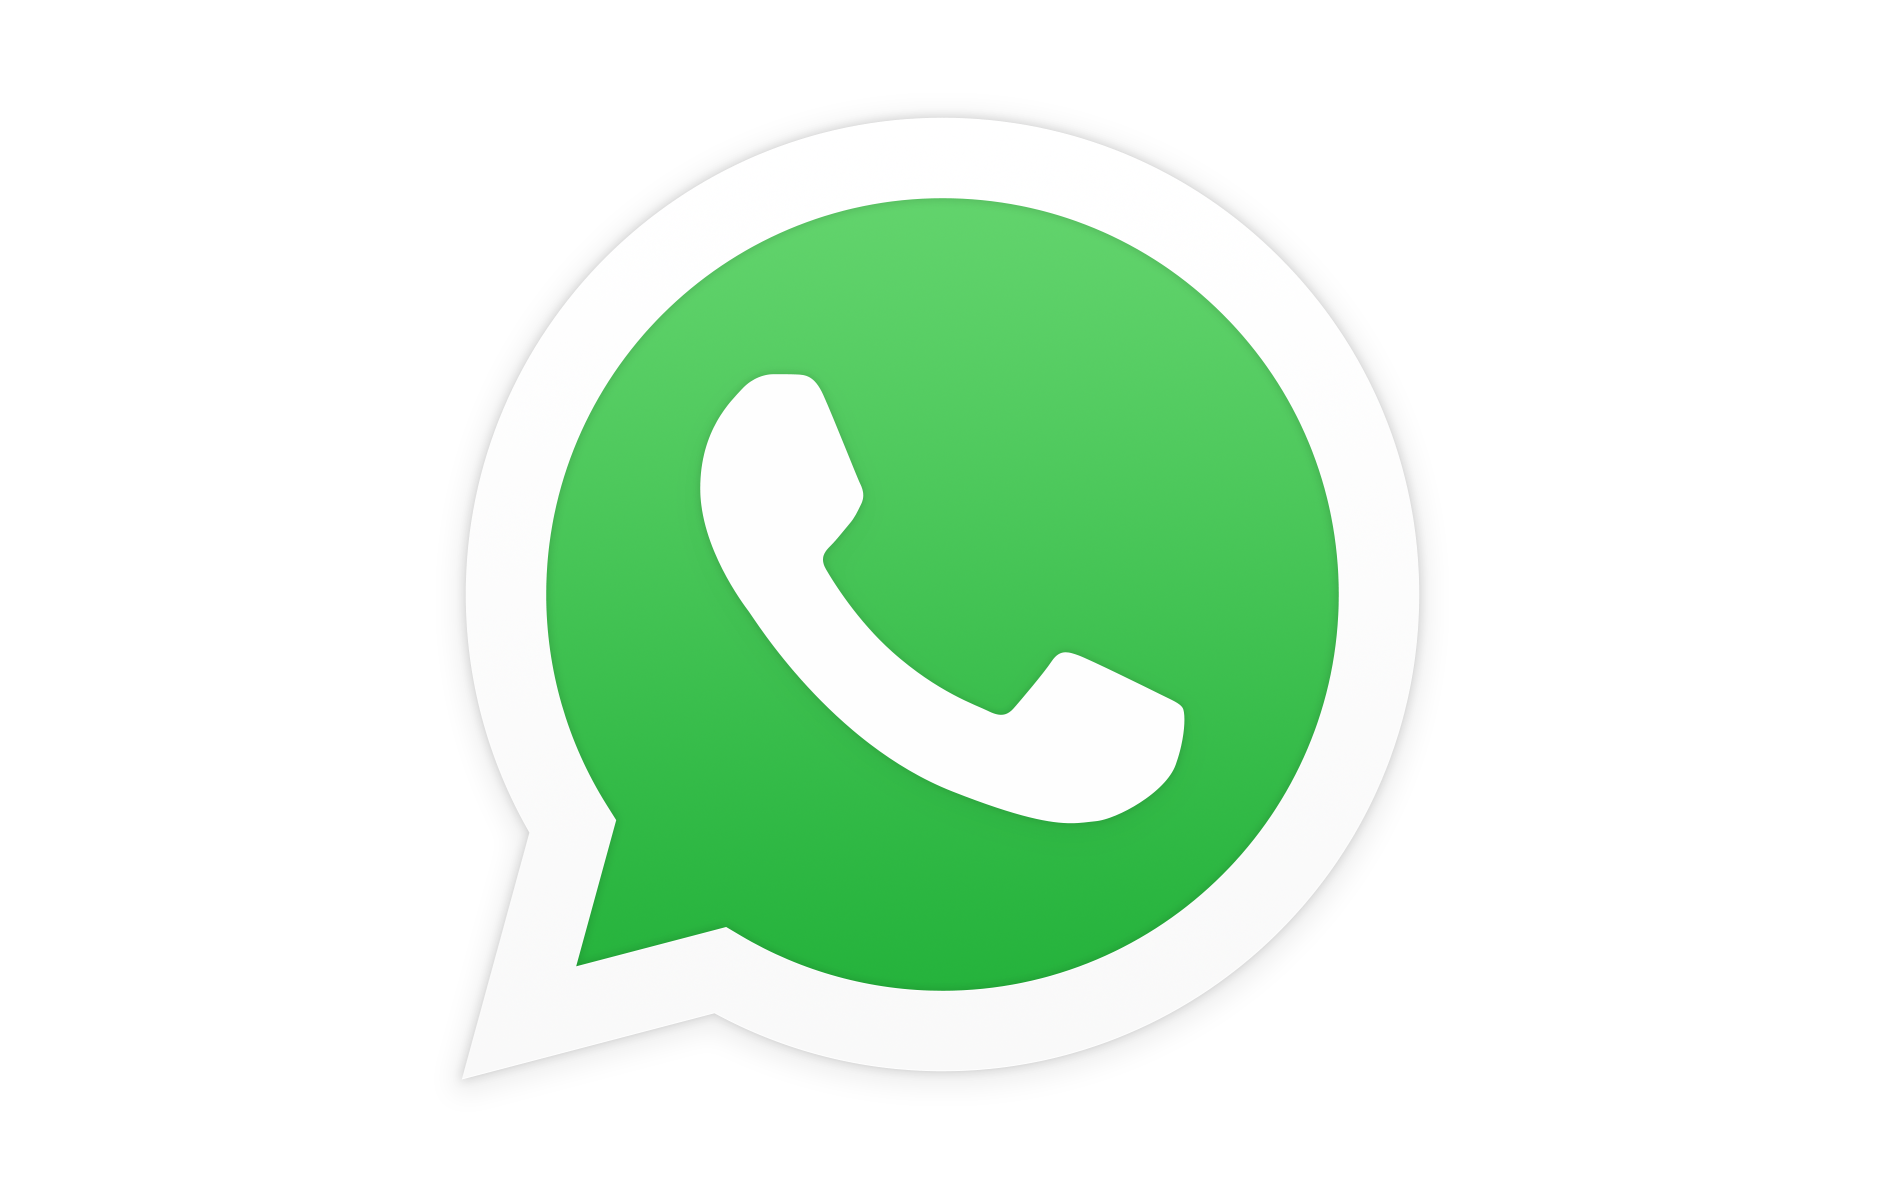 whatsapp app